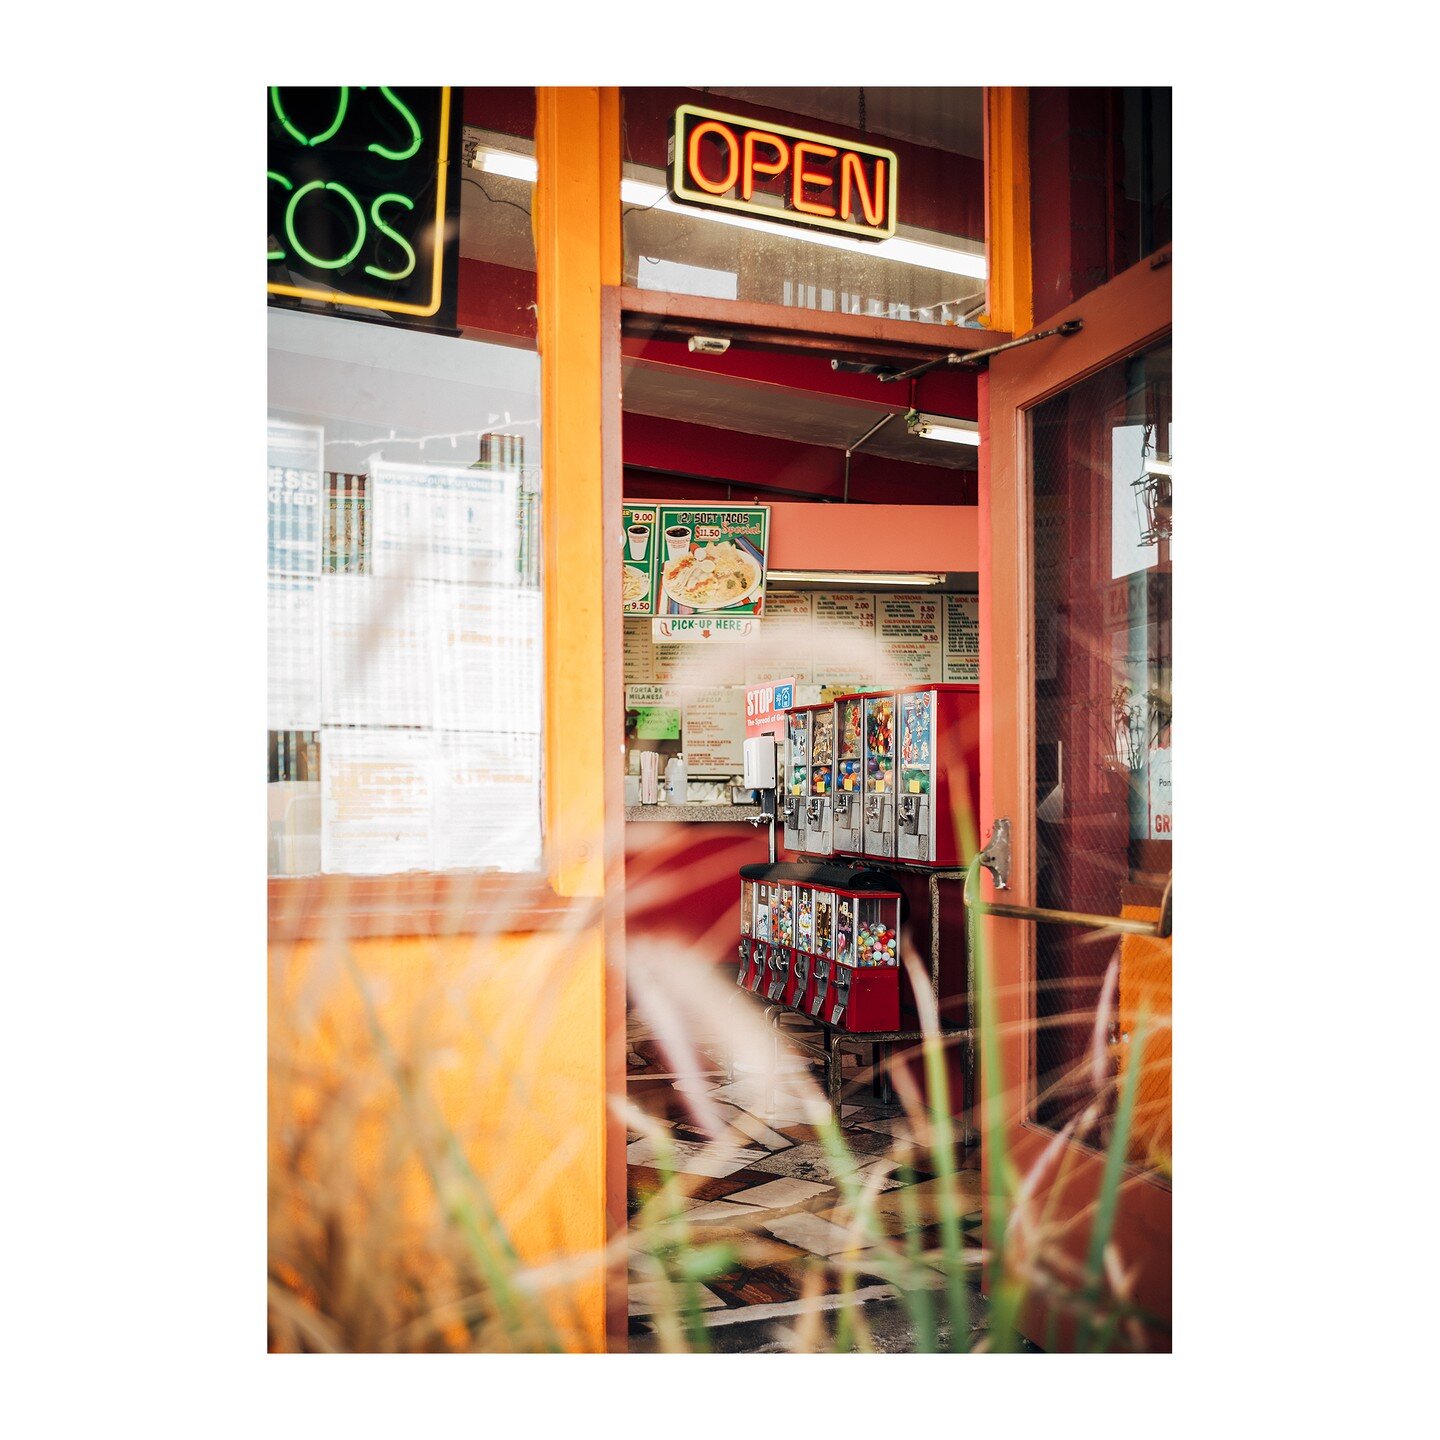 #tacos 
.
.
.
.
.
.
.
#thephotosector #tnscollective #insidephotos #takemagazine #streetphoto_art #streetphotocollective #bcncollective #banalmag #leicam10 #leica